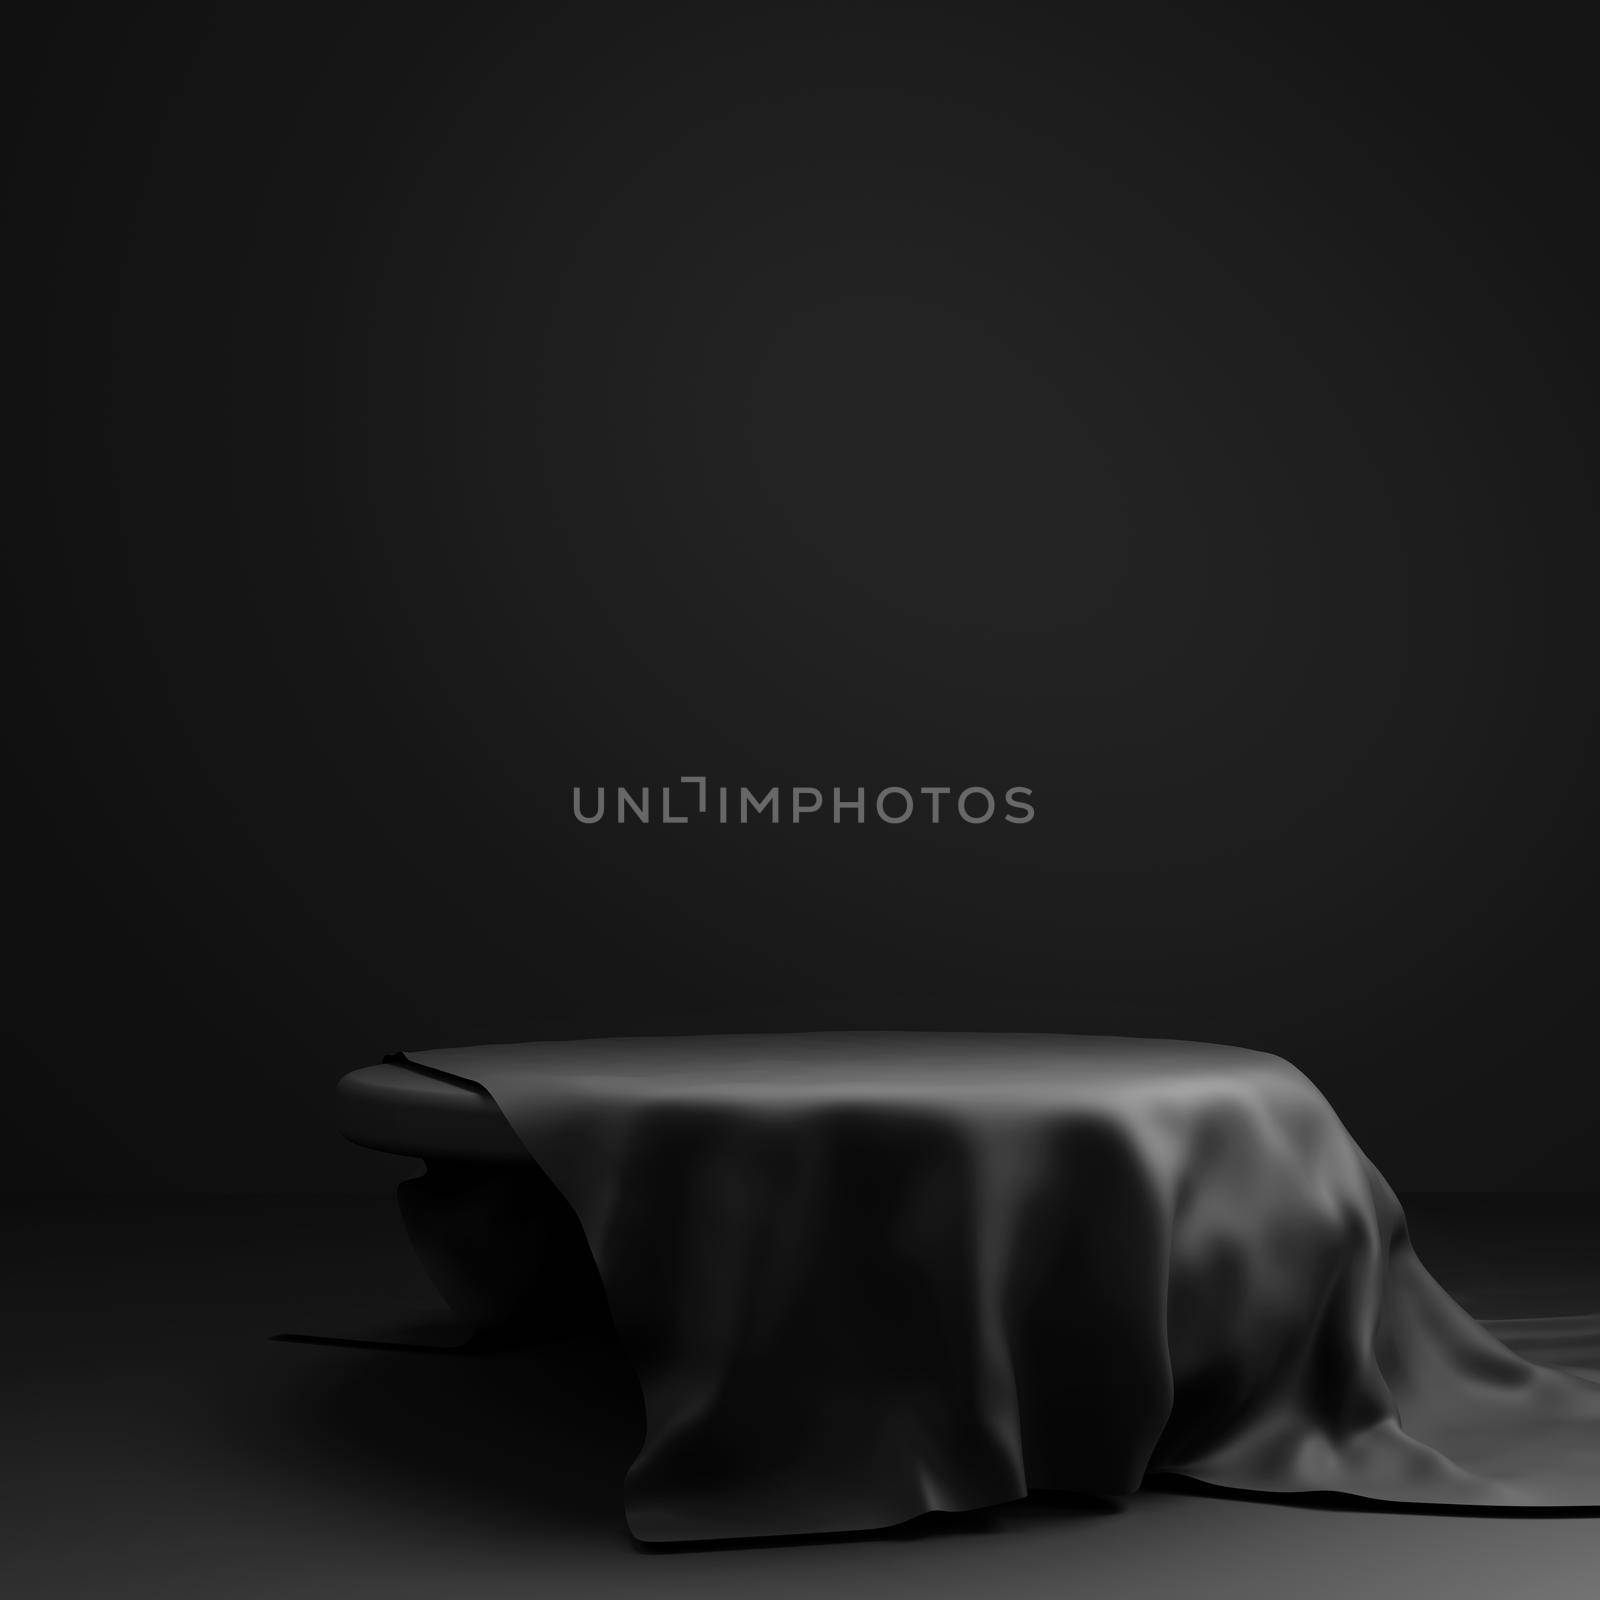 Black friday sale banner concept design of podium and cloth 3D render